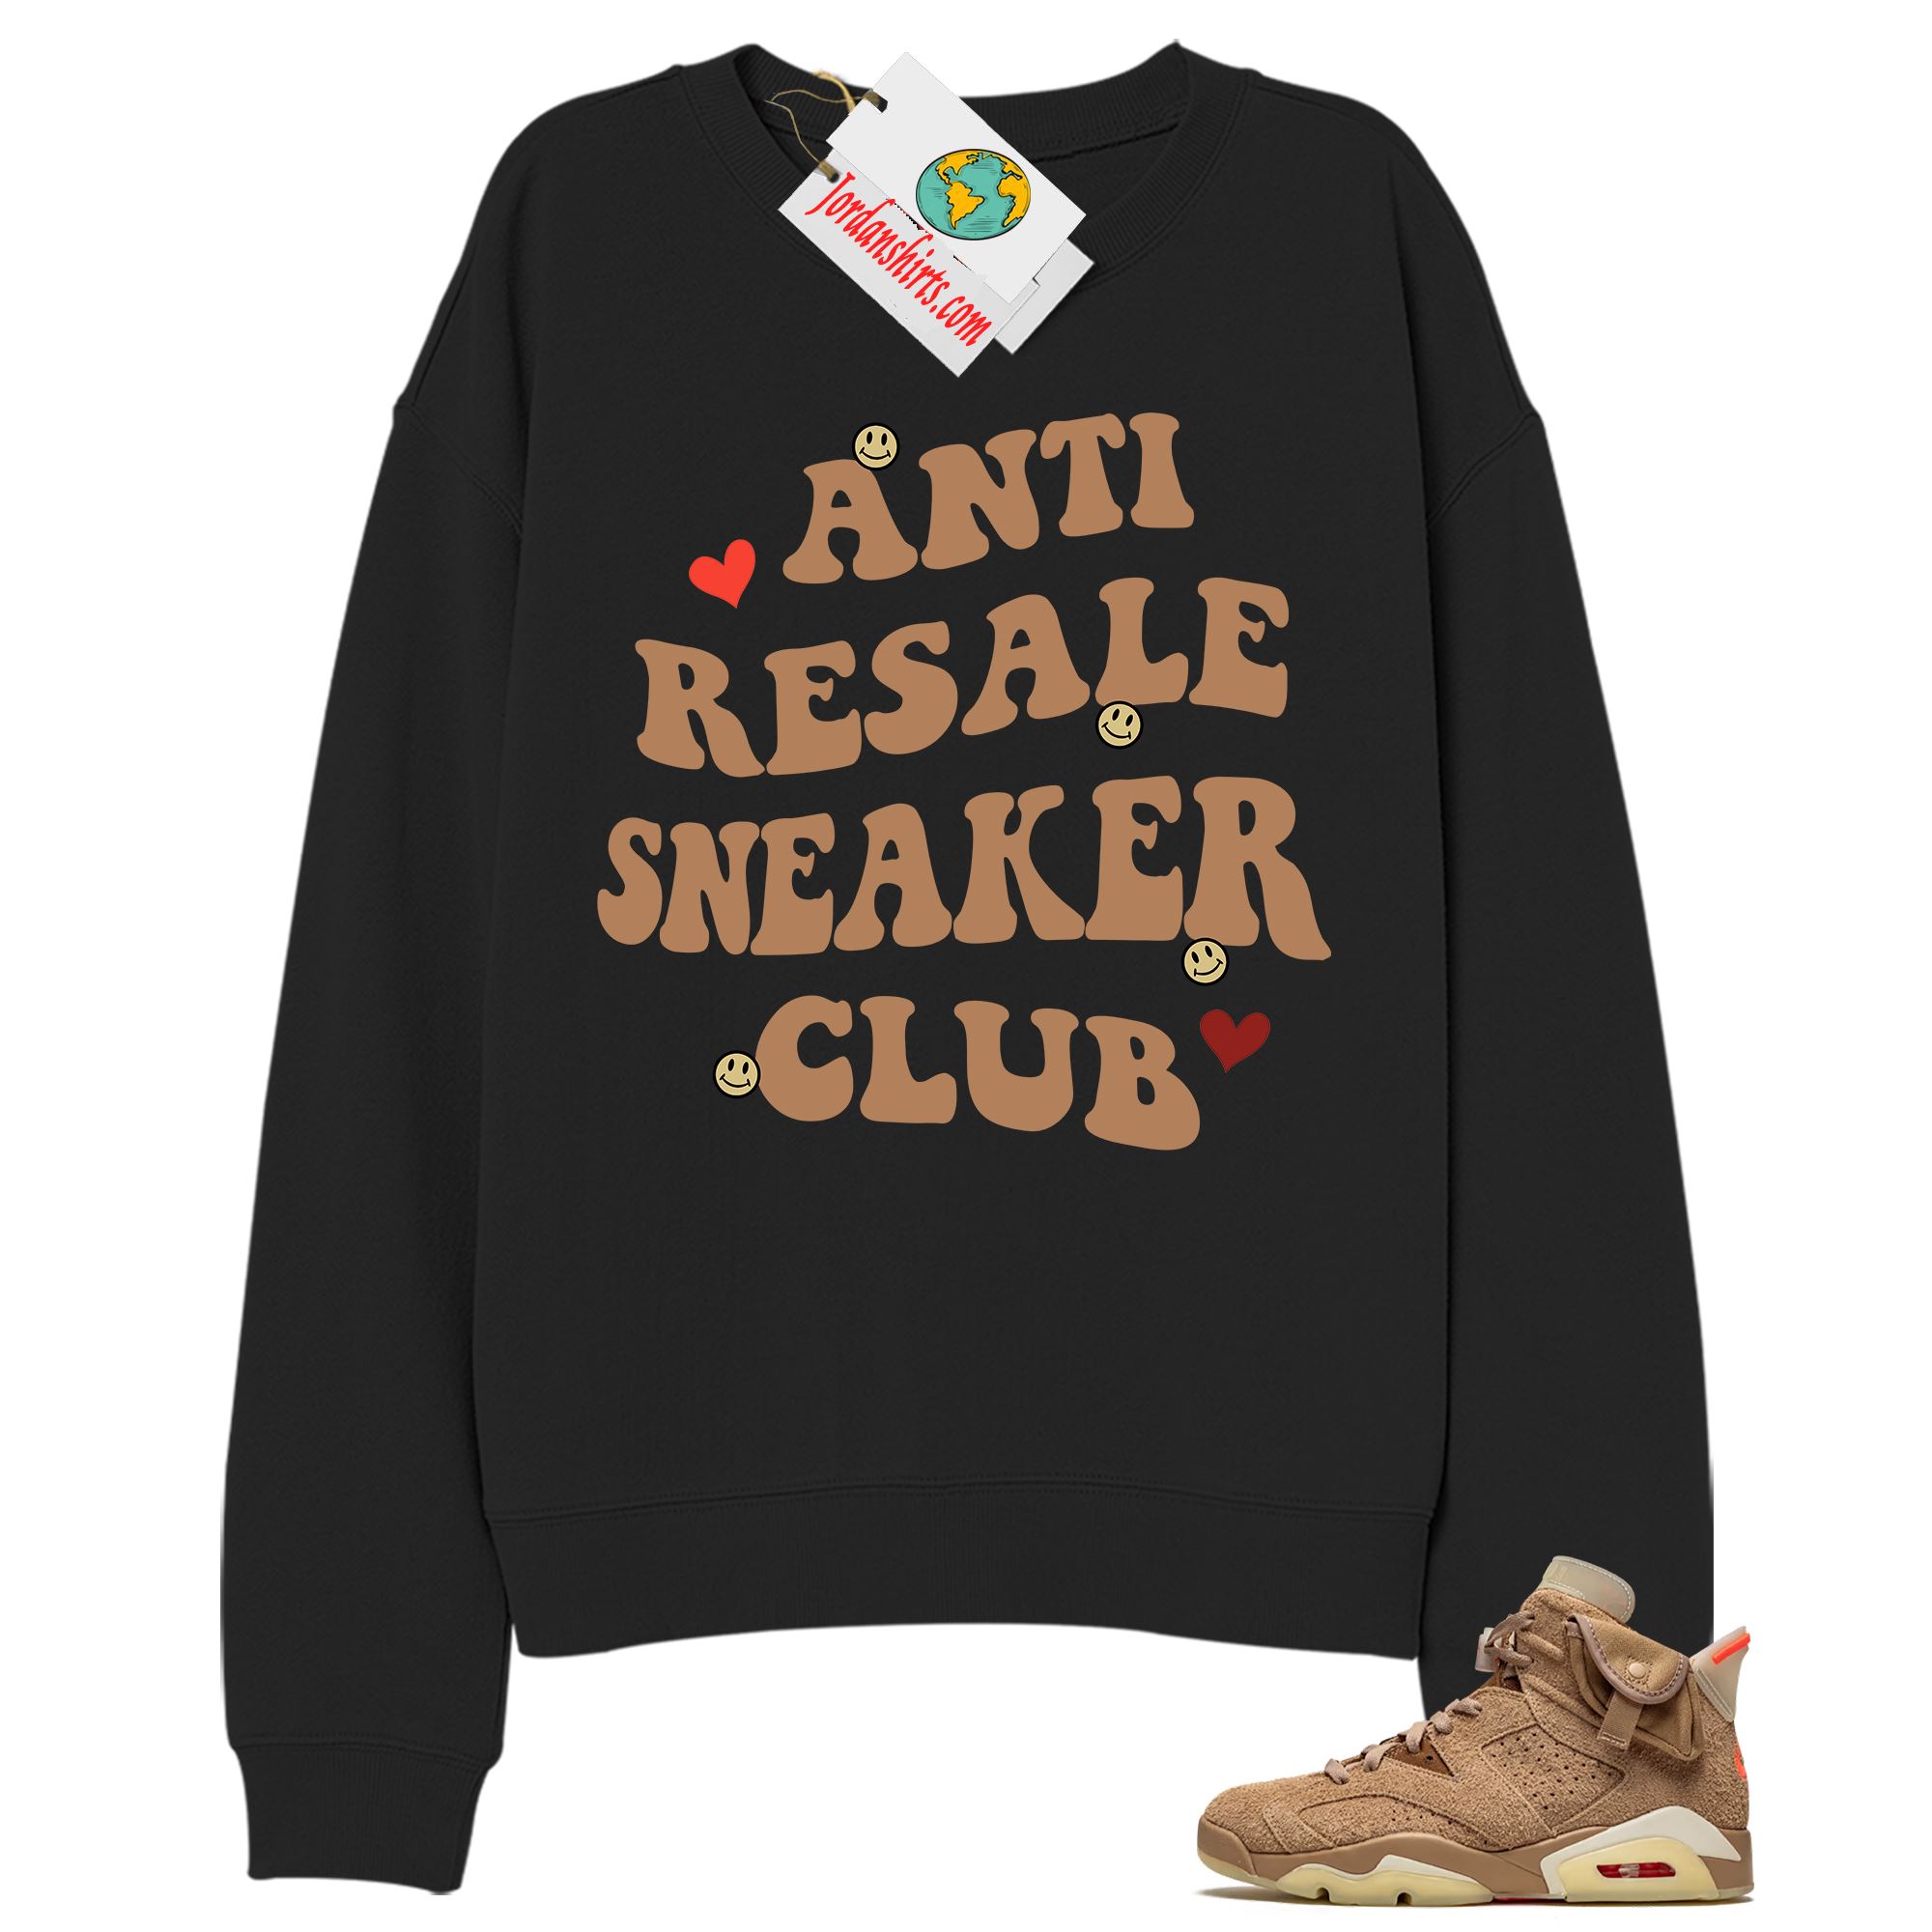 Jordan 6 Sweatshirt, Anti Resale Sneaker Club Black Sweatshirt Air Jordan 6 Travis Scott 6s Size Up To 5xl